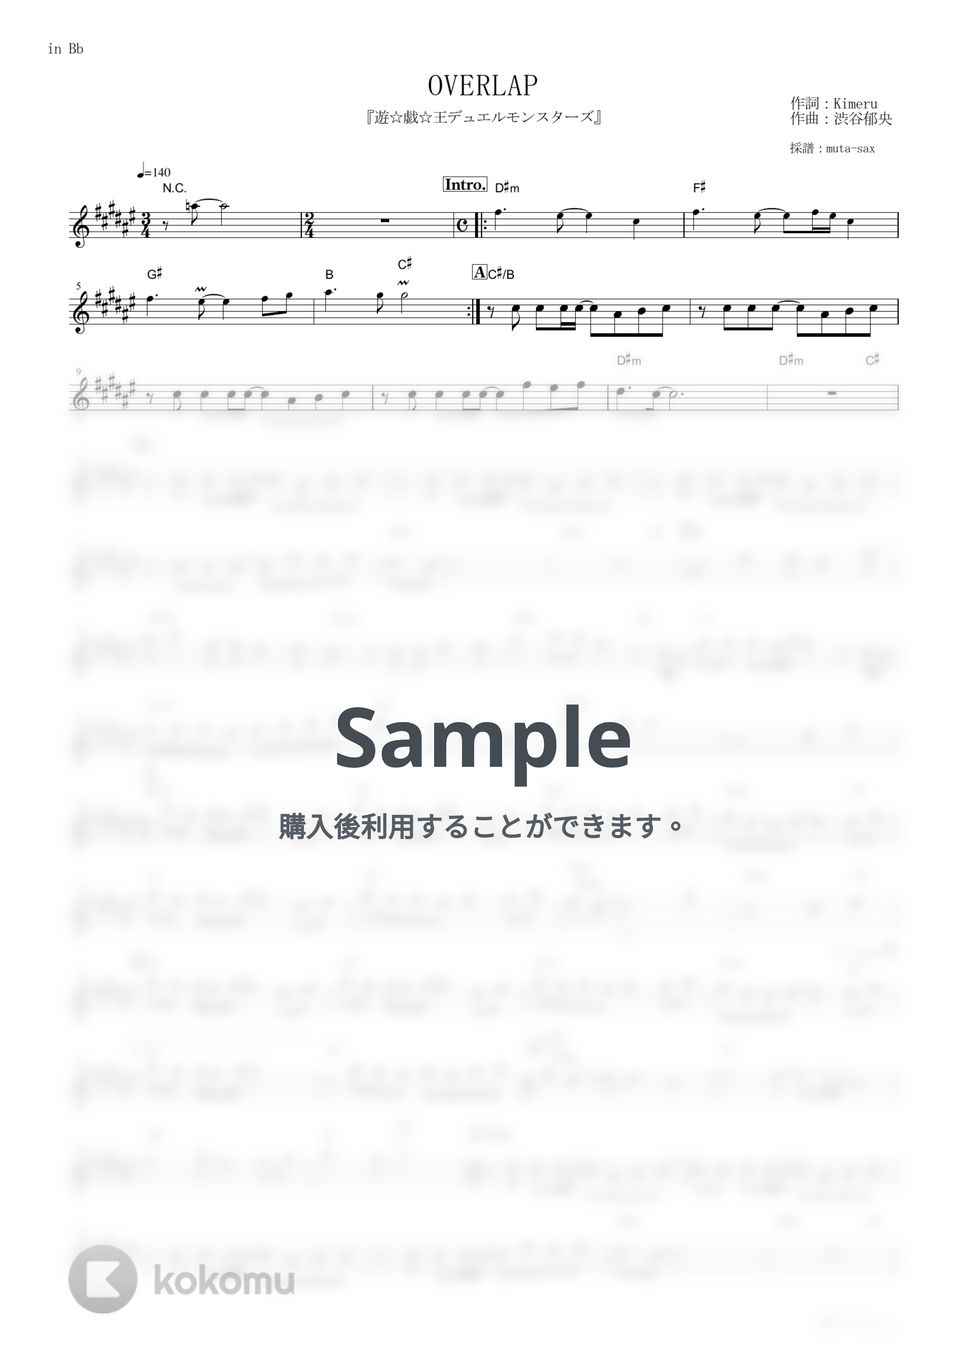 Kimeru - OVERLAP (『遊☆戯☆王デュエルモンスターズ』 / in Bb) by muta-sax